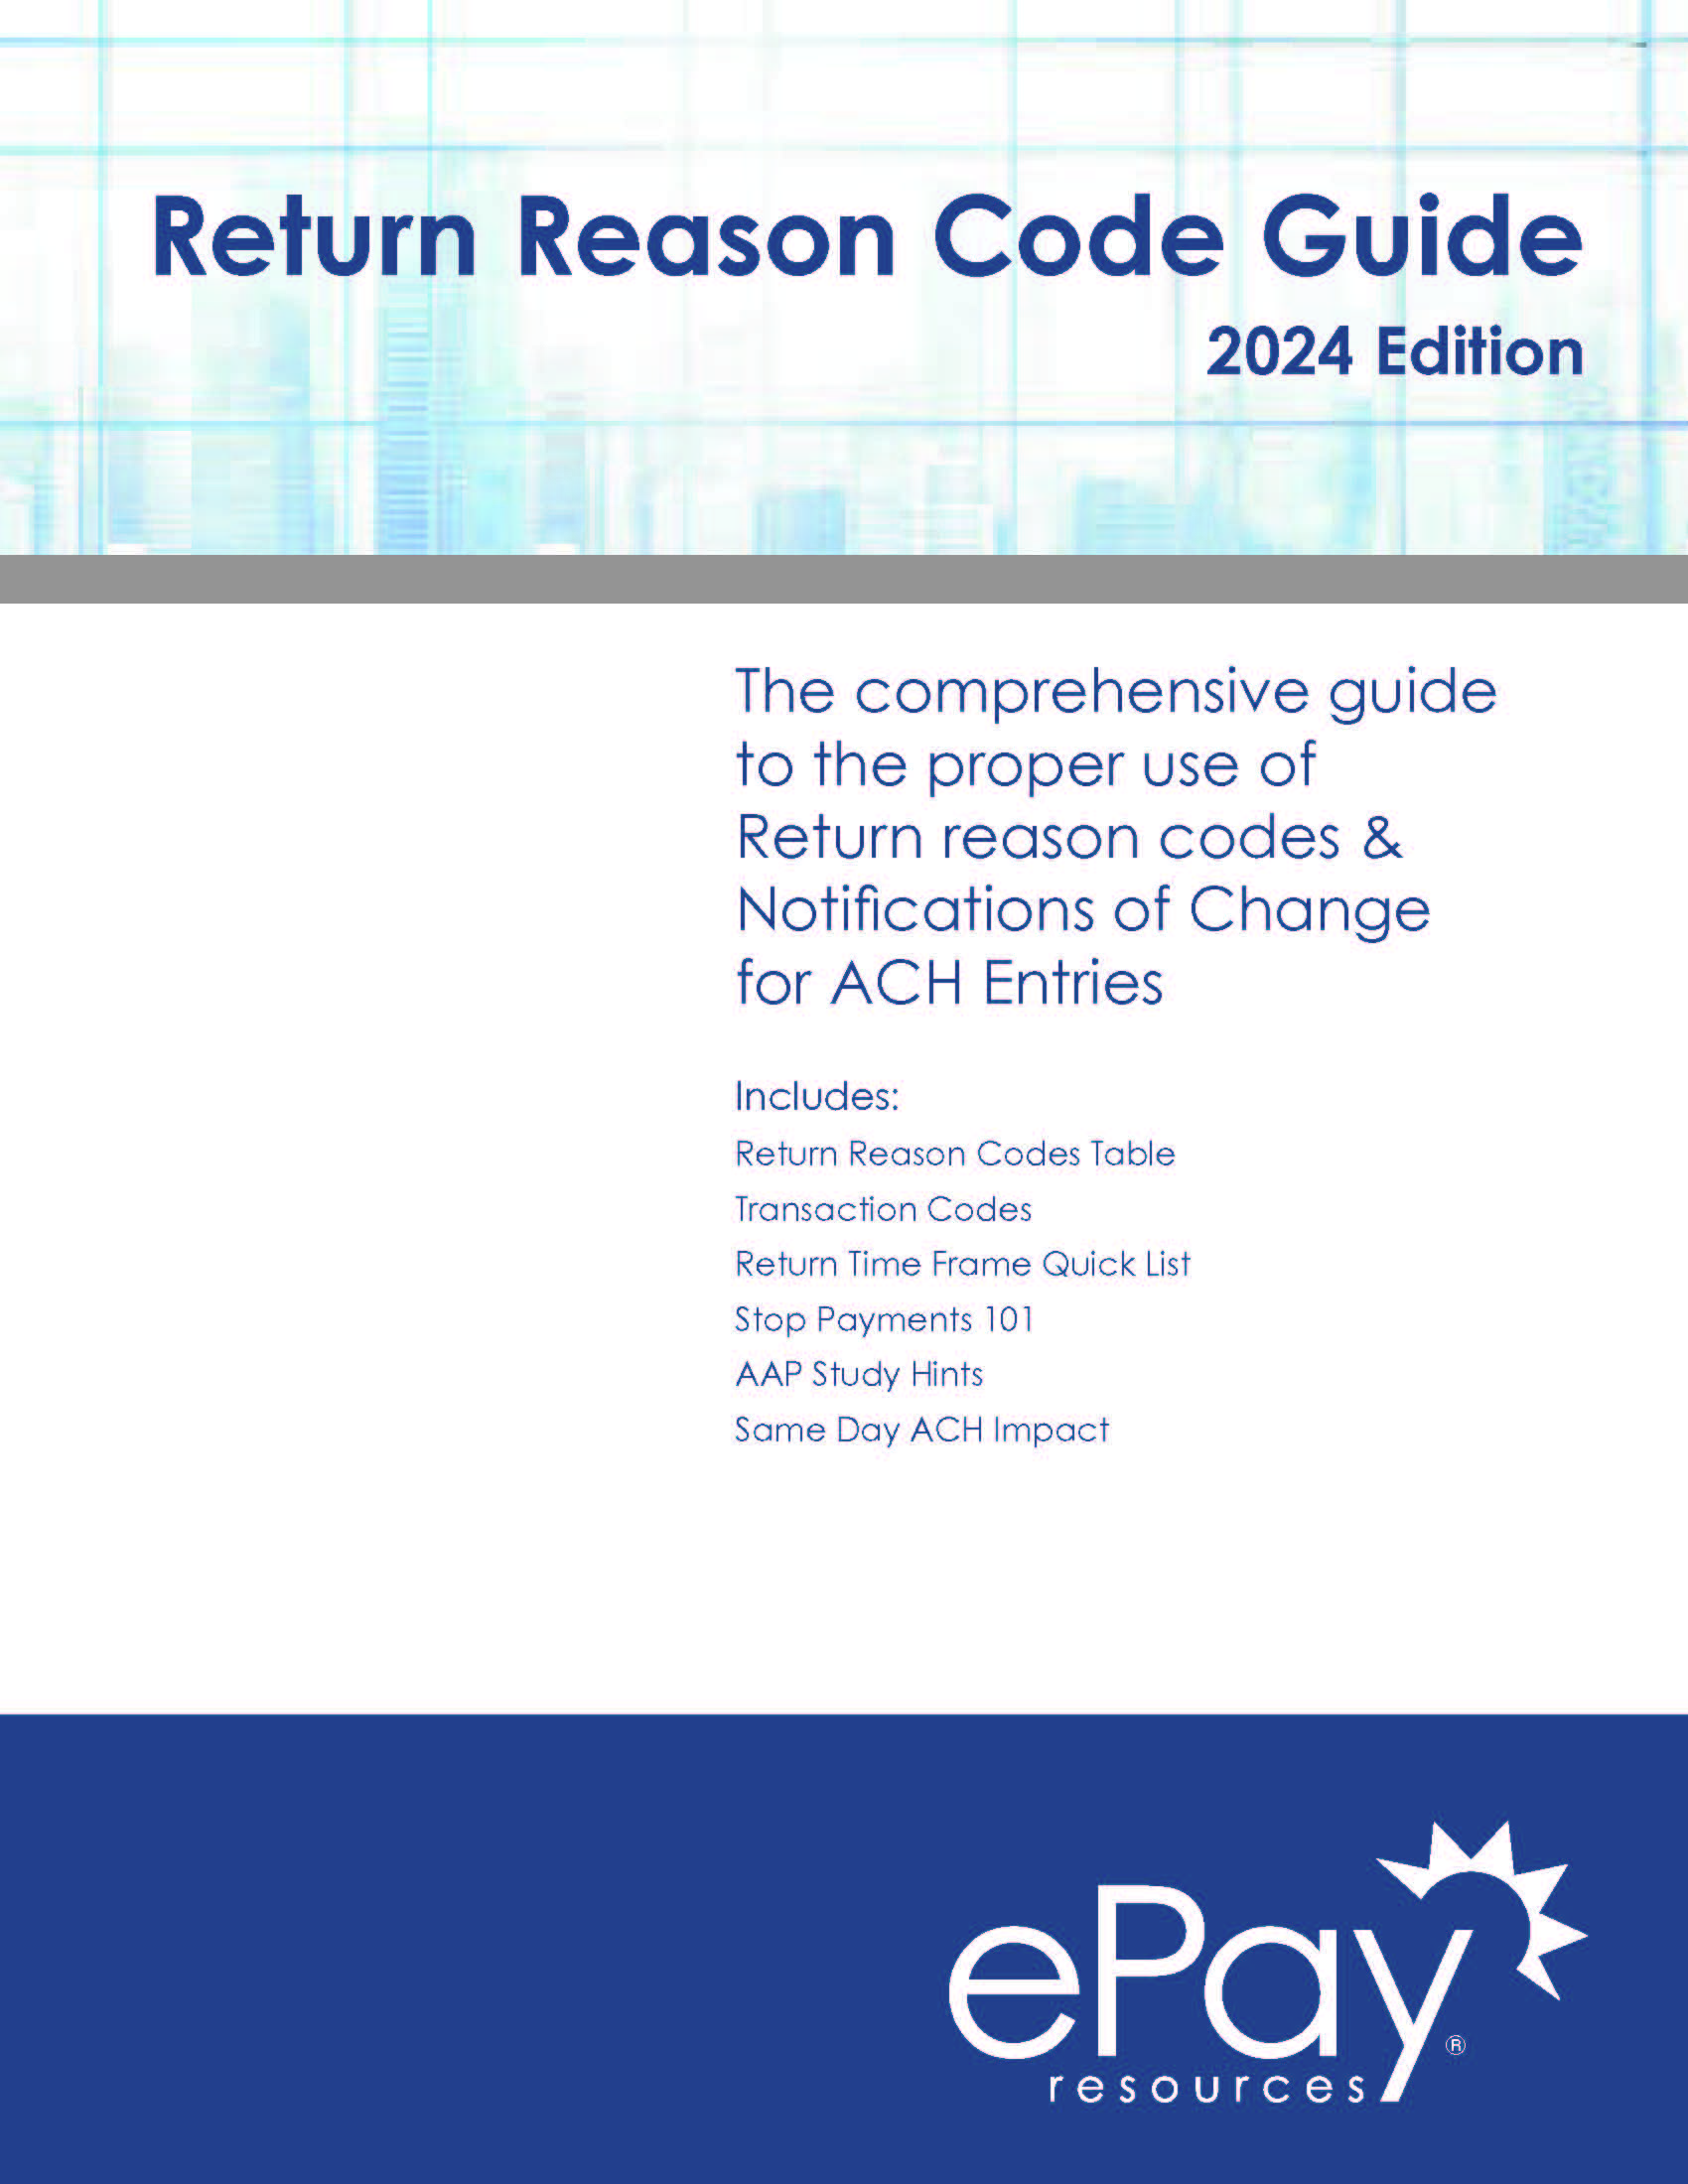 Return Reason Code Guide & NOC Booklet